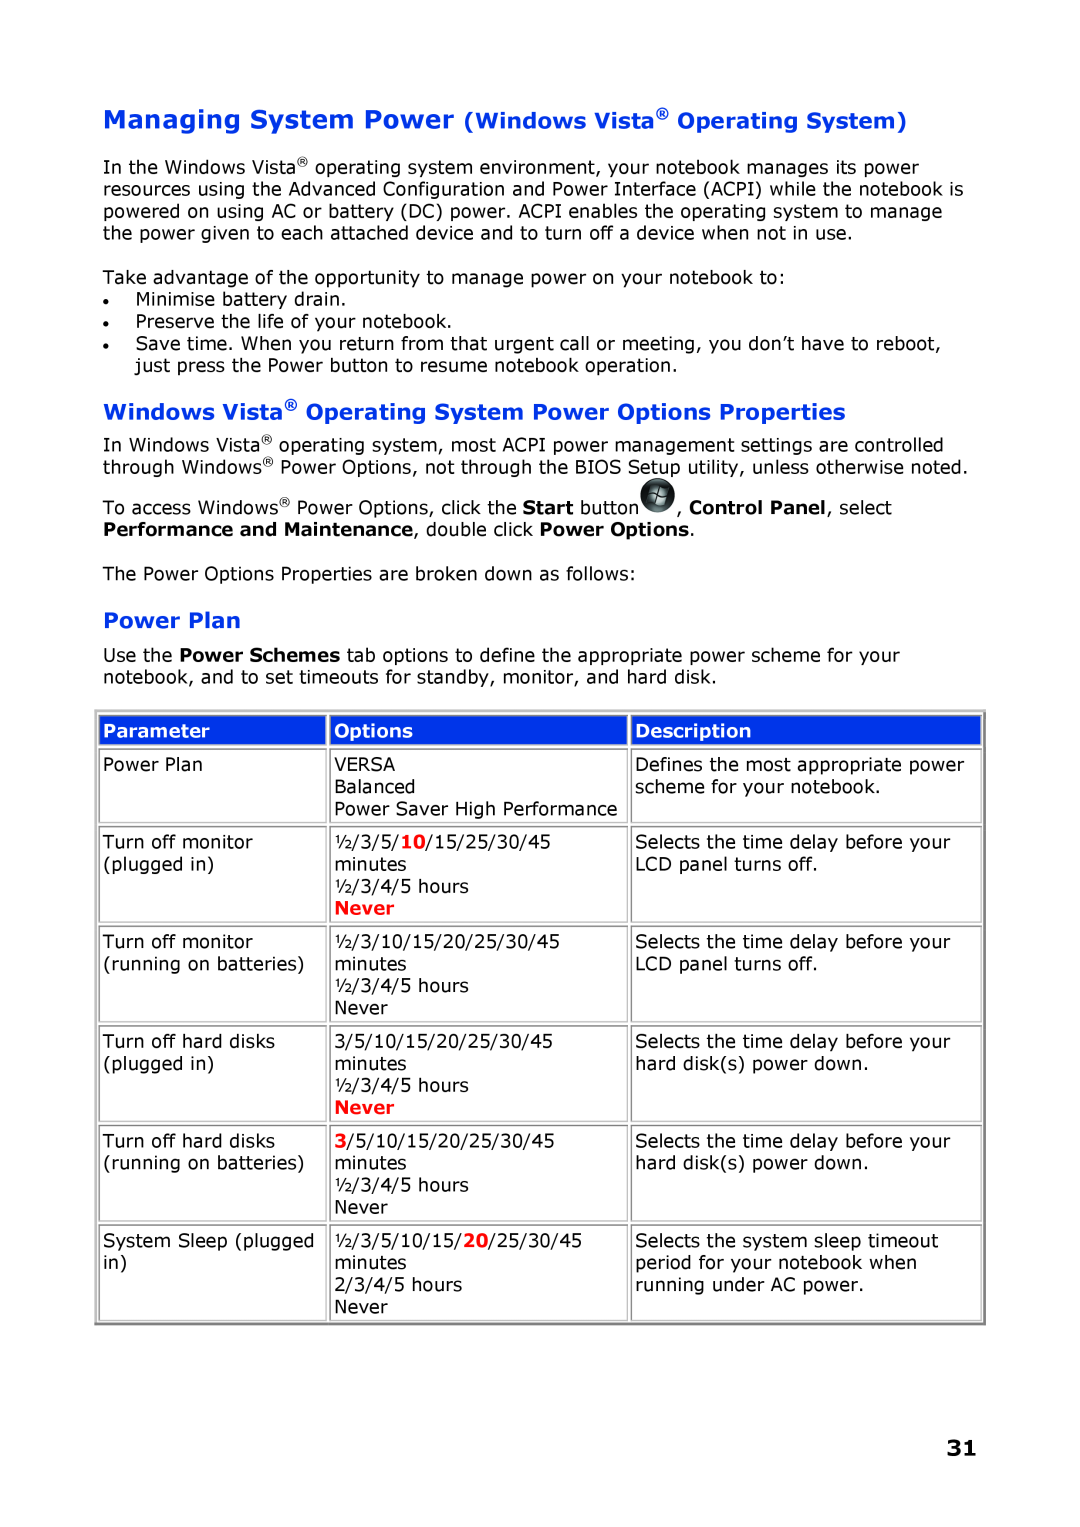 NEC P8510 Managing System Power Windows Vista Operating System, Windows Vista Operating System Power Options Properties 